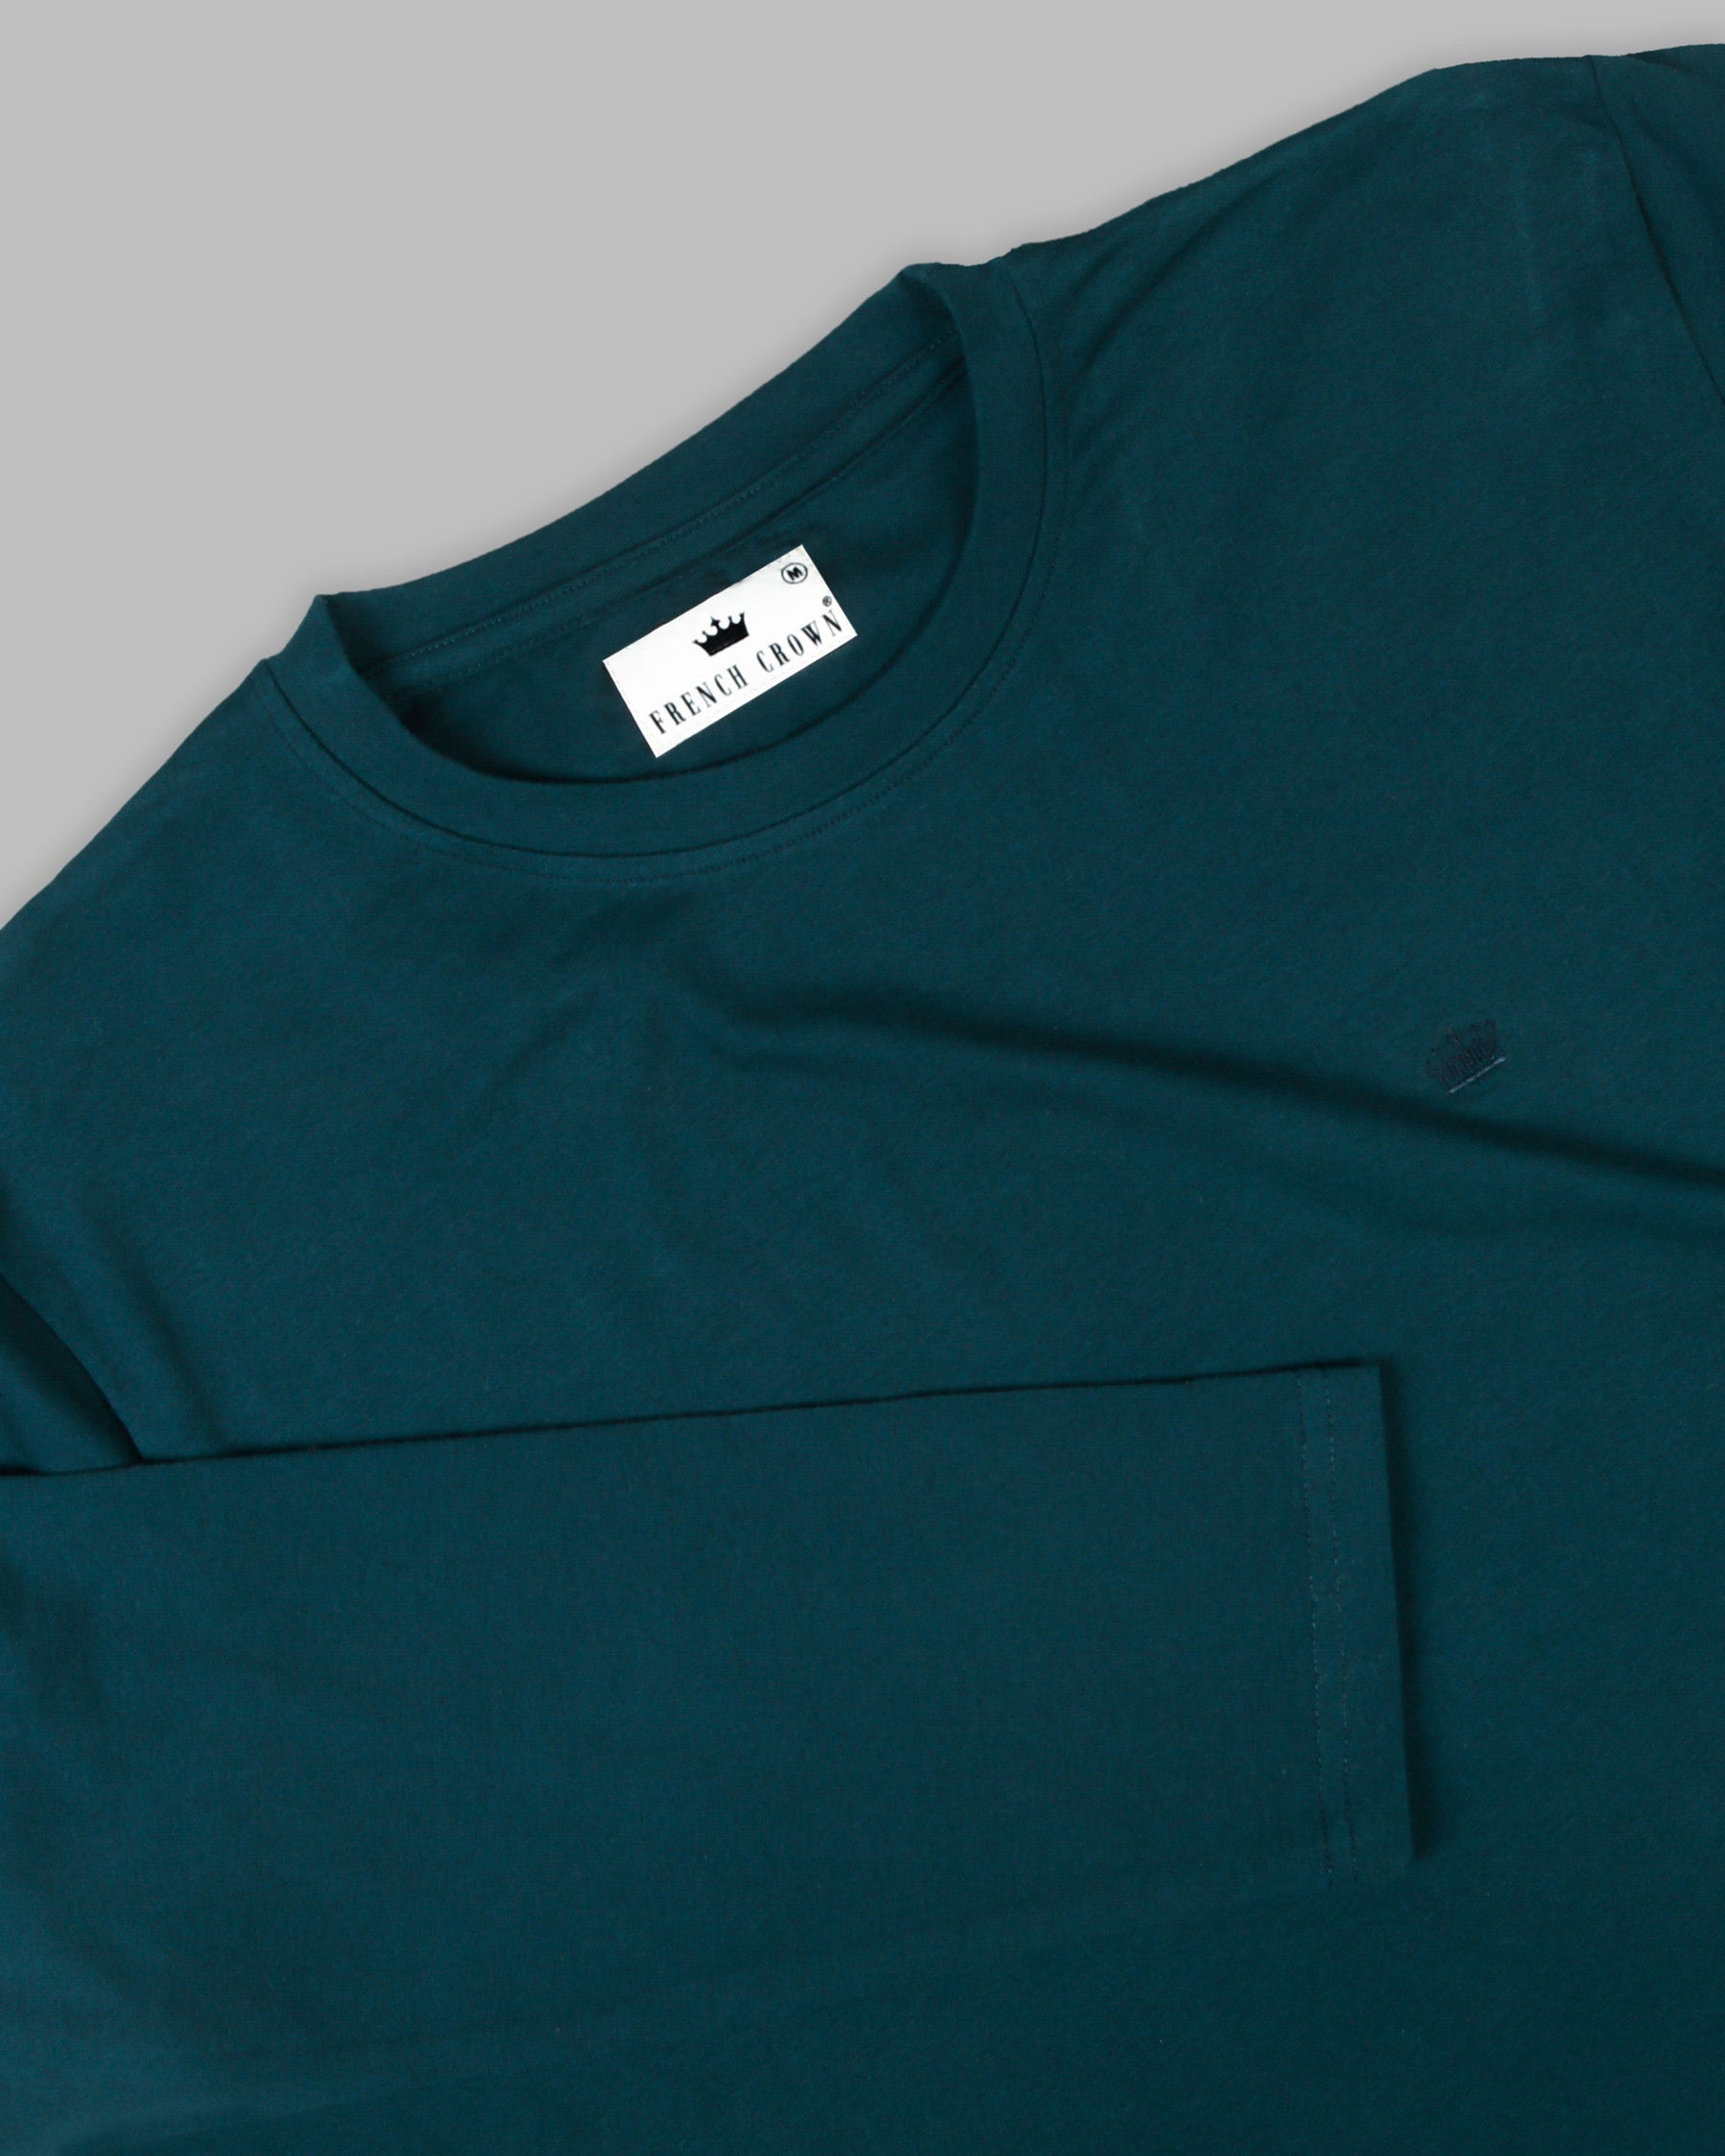 Peacock Blue Full-Sleeve Super soft Organic Cotton Jersey T-shirt TS123-M, TS123-S, TS123-XL, TS123-XXL, TS123-L